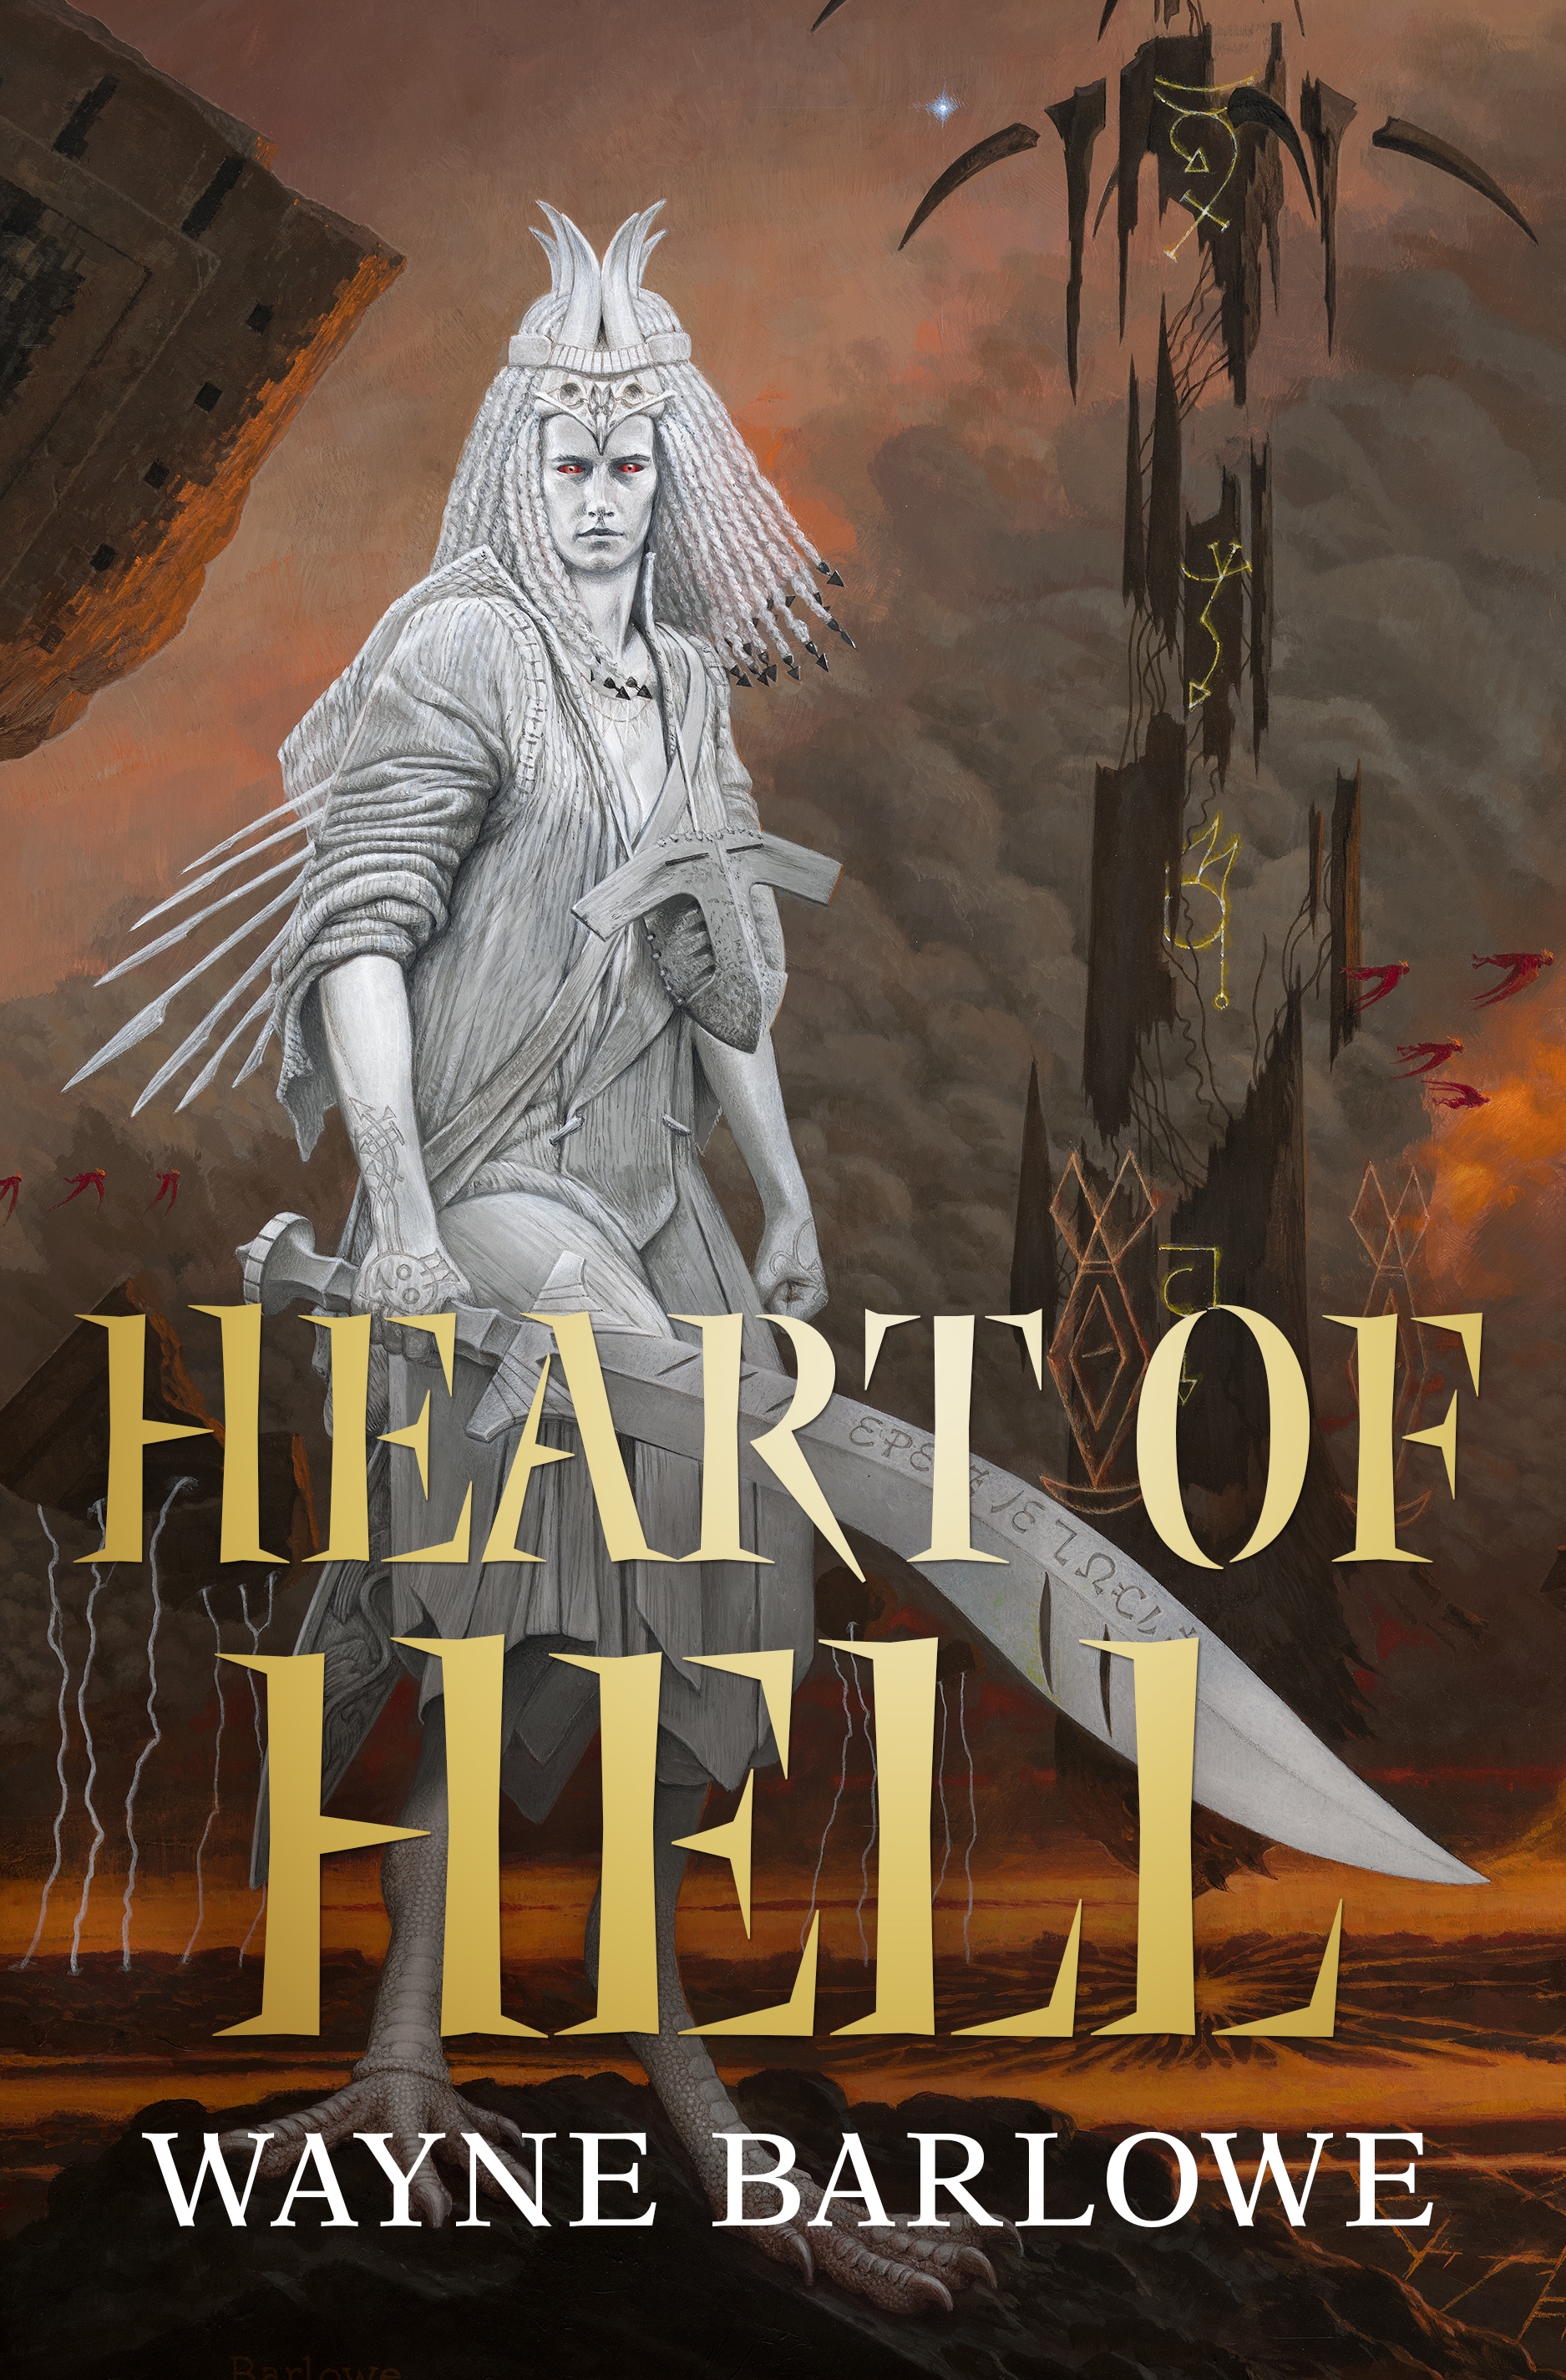 The Heart of Hell by Wayne Barlowe